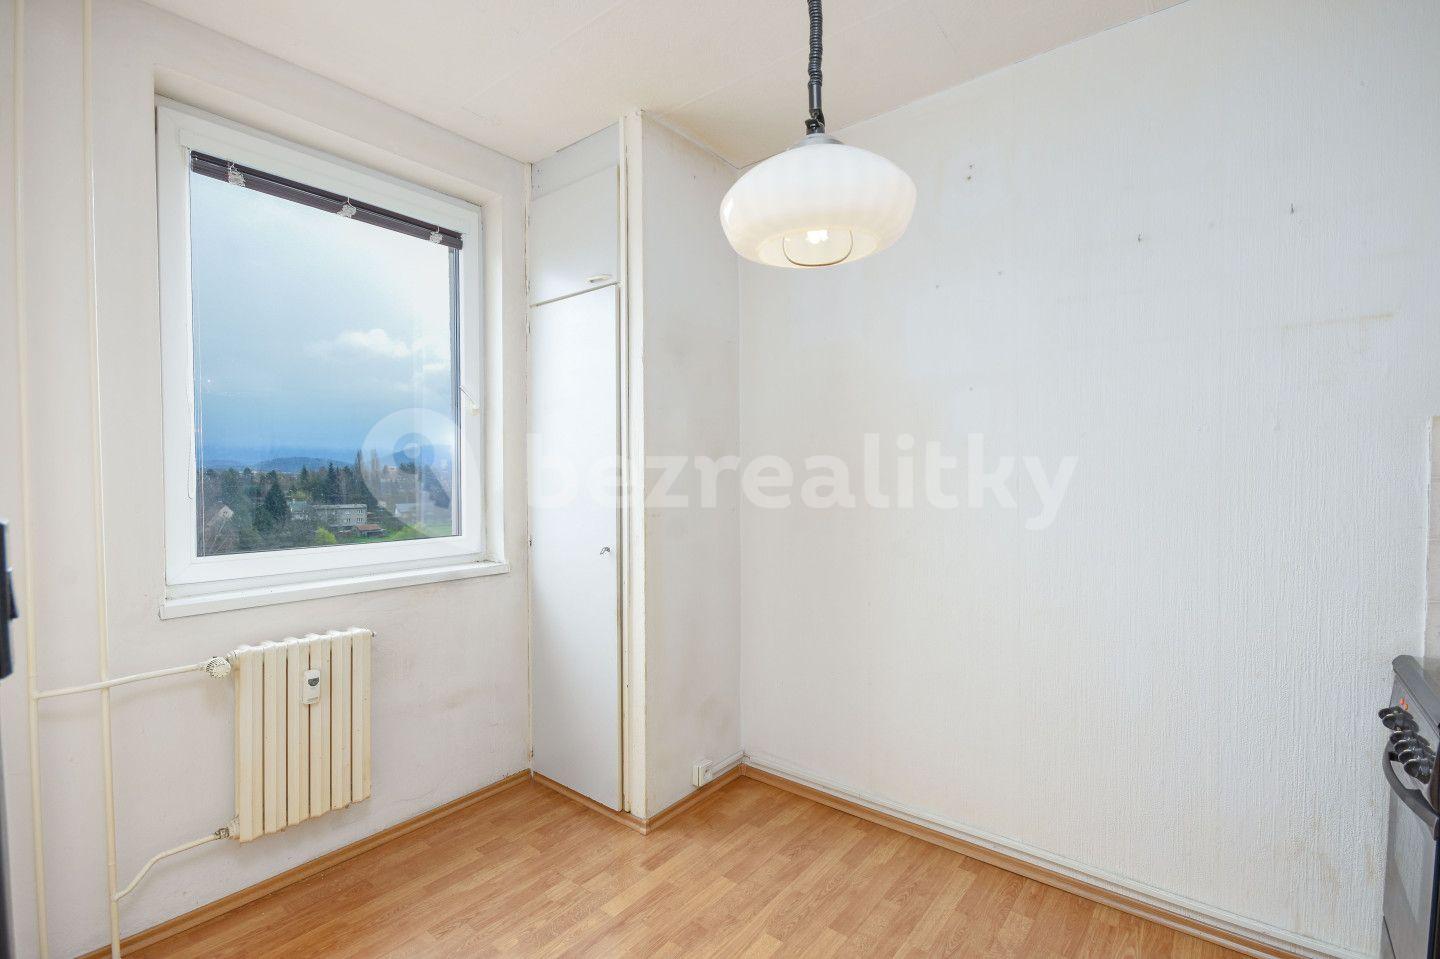 Predaj bytu 2-izbový 43 m², Francouzská, Kopřivnice, Moravskoslezský kraj